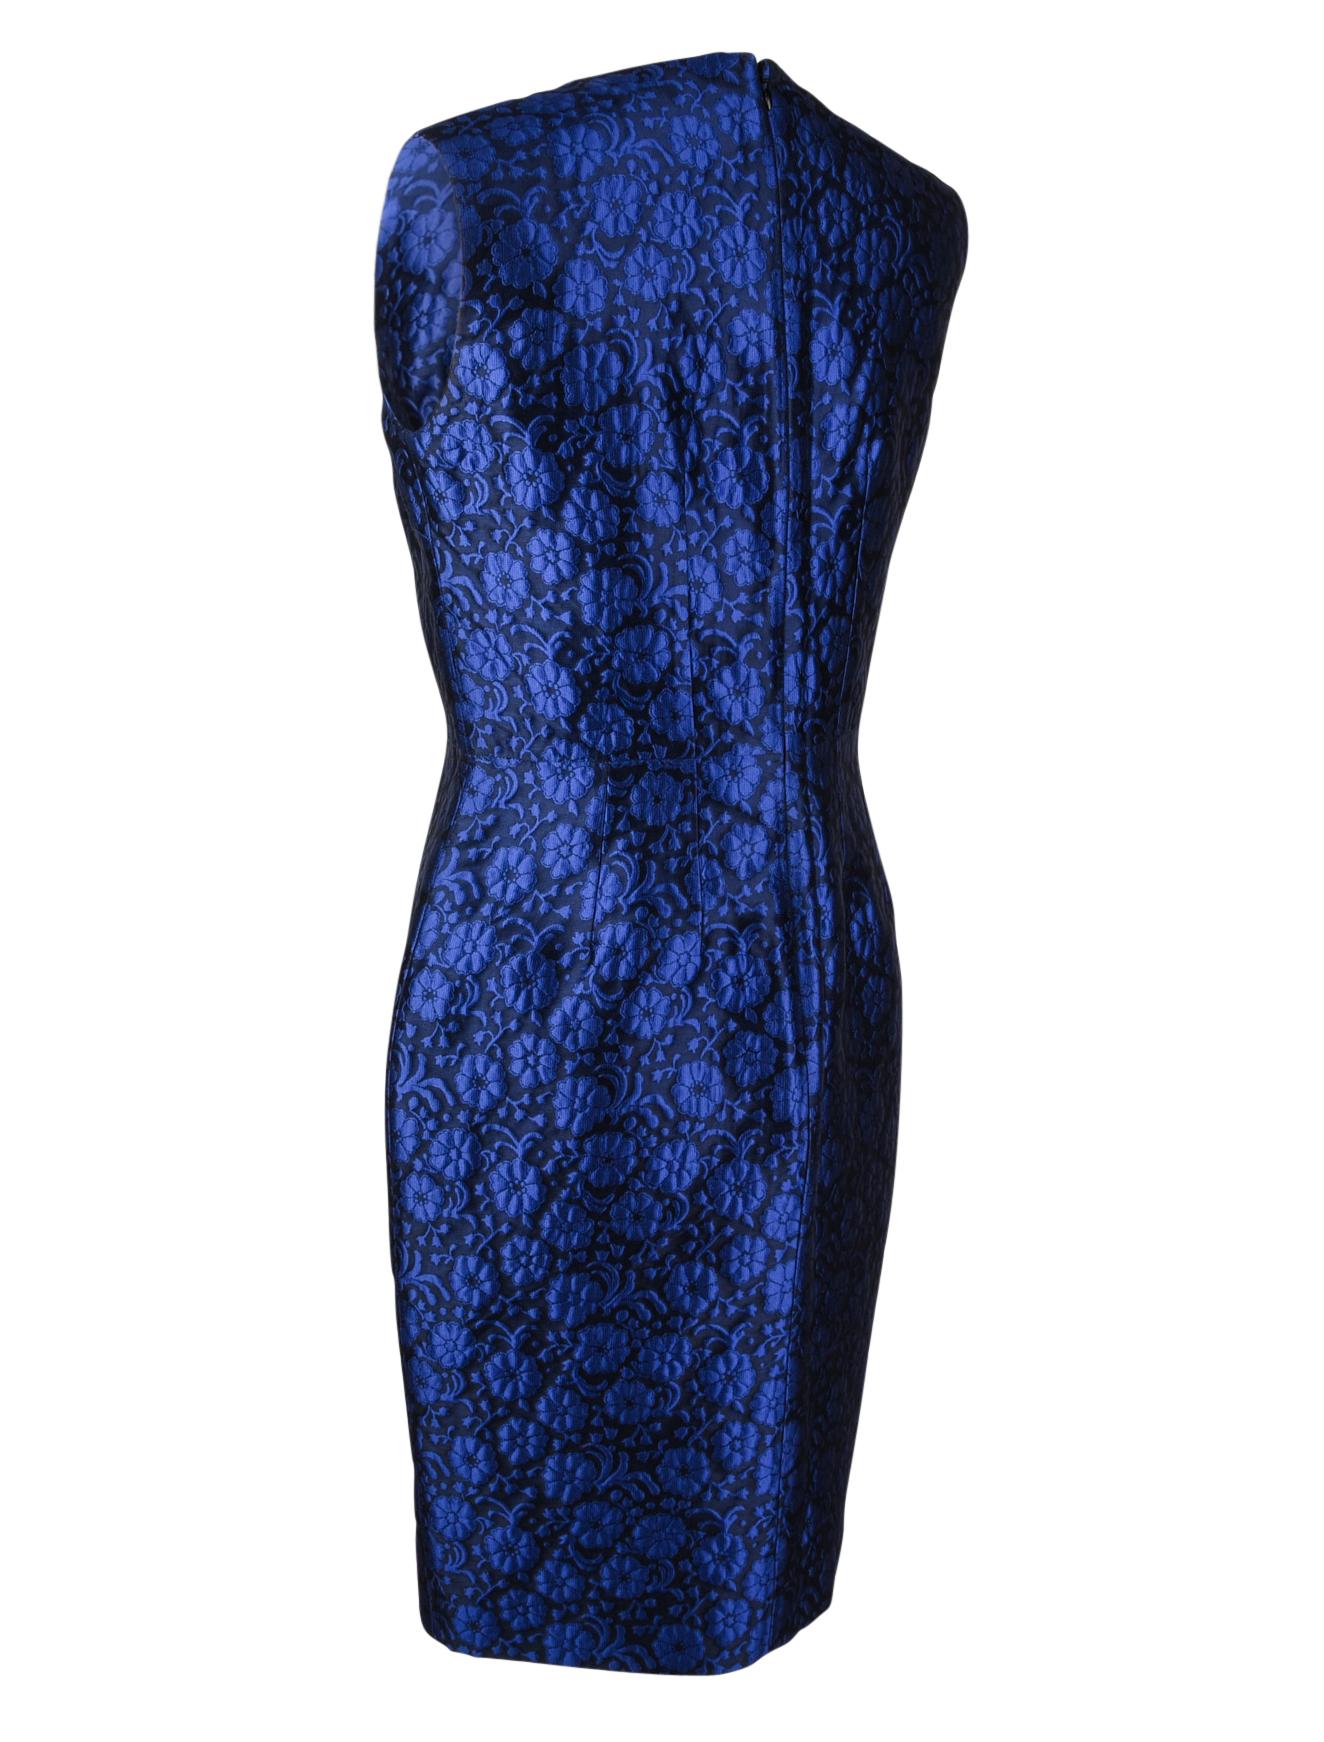 Women's Christian Dior Dress Blue Floral Print w/ Long Sleeveless Vest 8